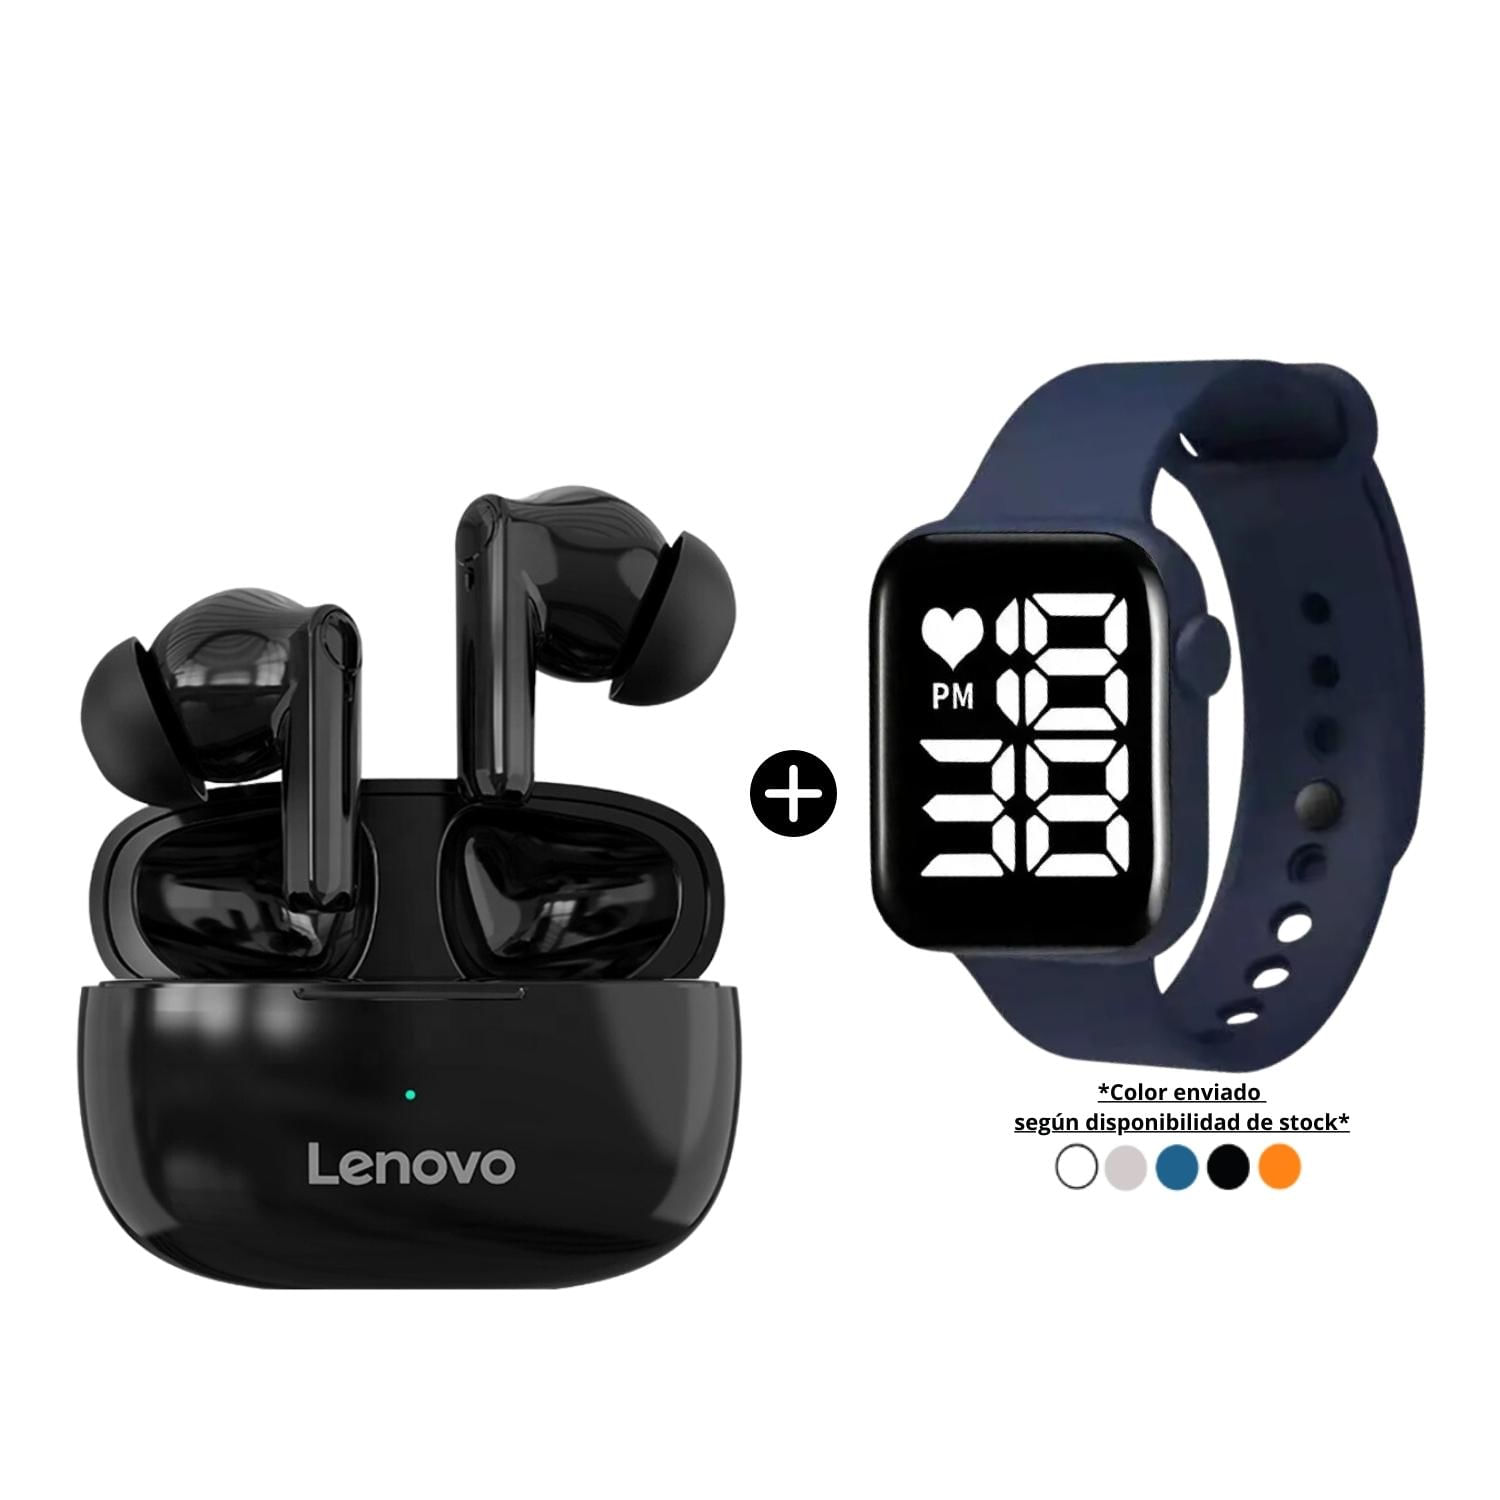 Audifono Lenovo Bluetooth Ht05 Tws Negro Mas Reloj Led Watch de Regalo